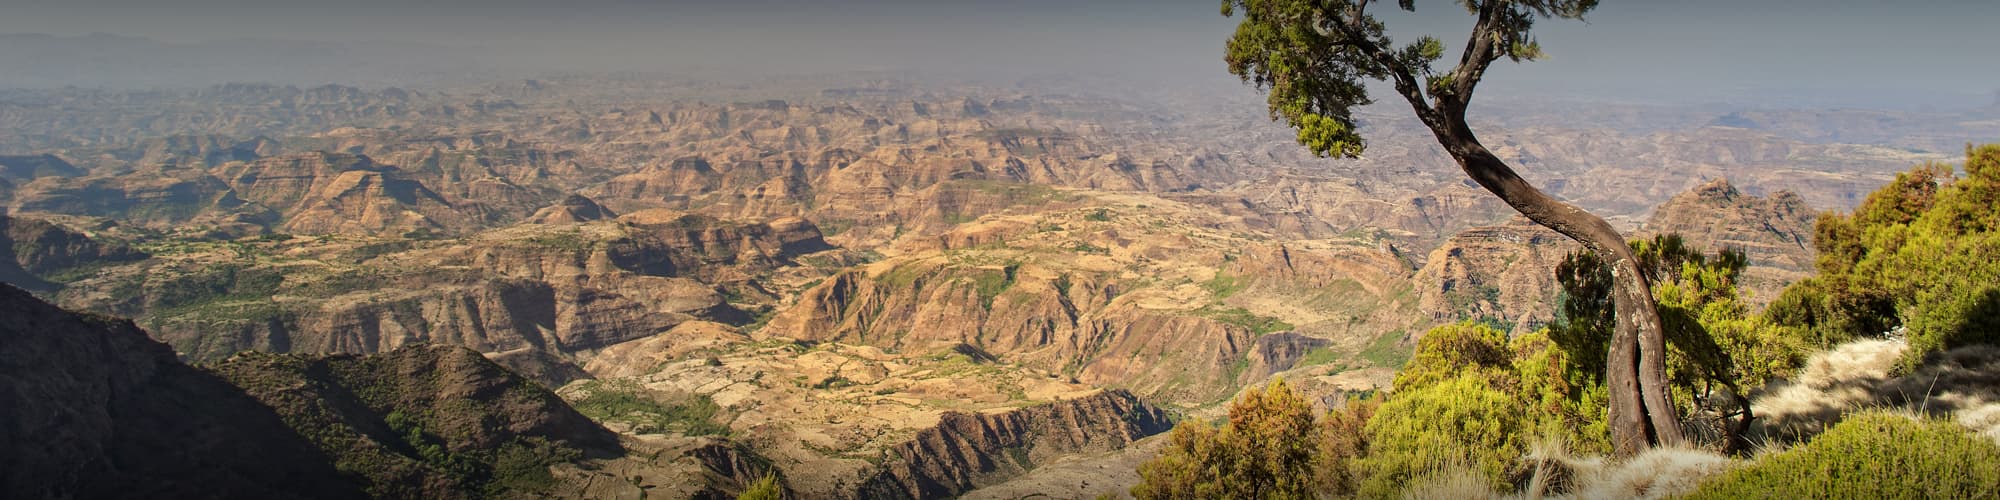 Trek en Ethiopie : circuit, randonnée et voyage  © Guenter Guni / iStock